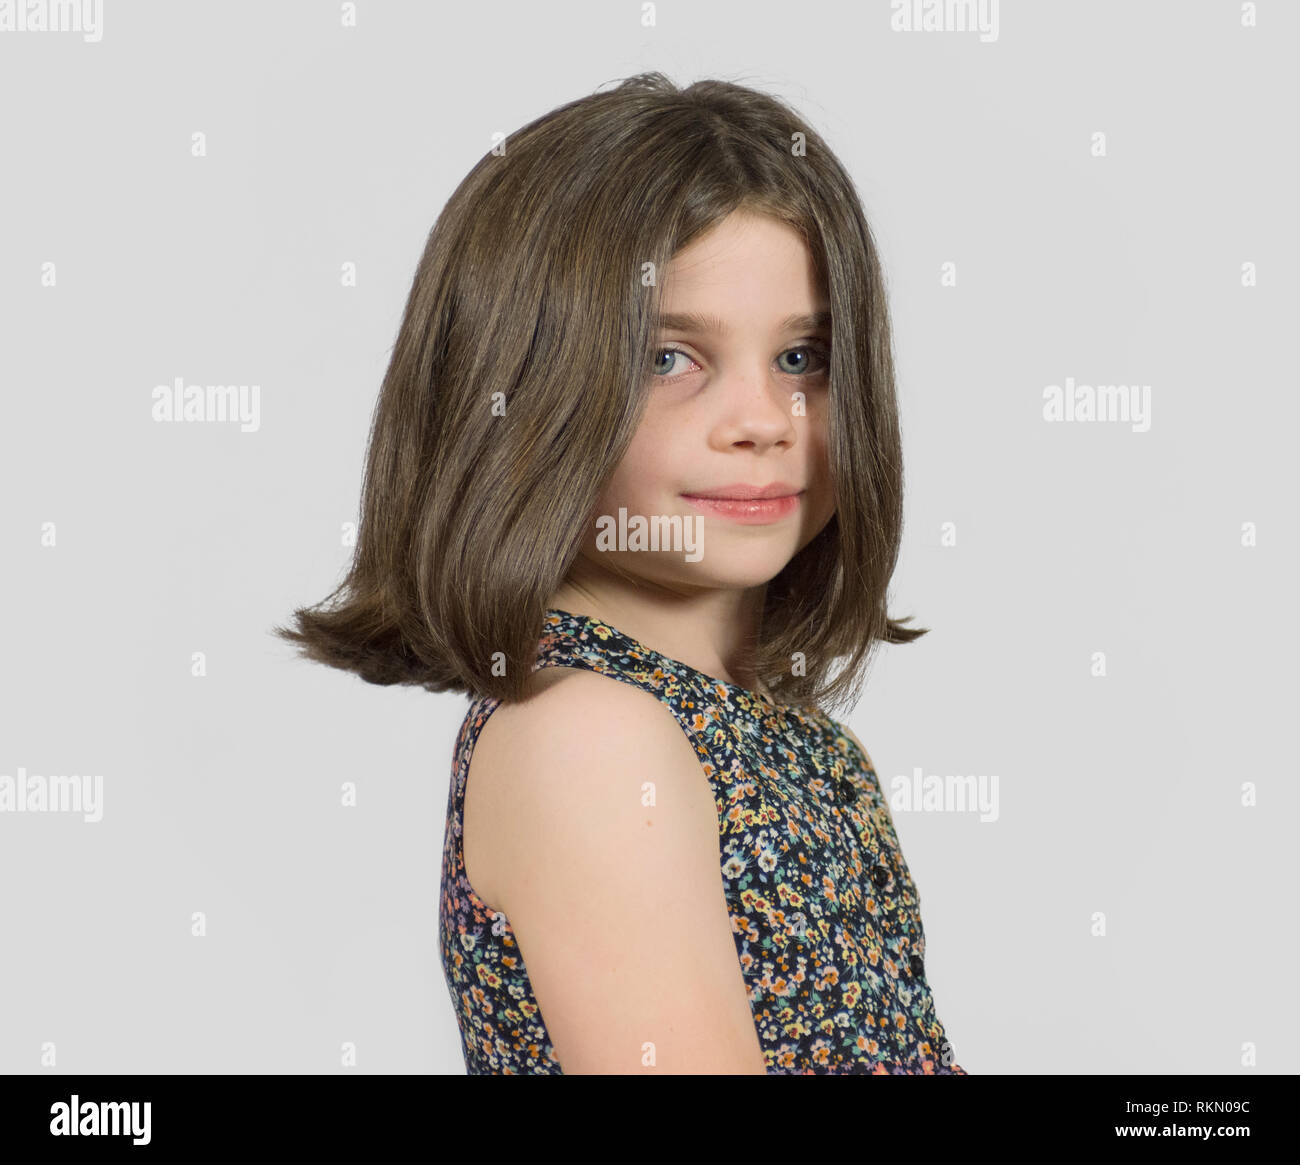 Headshot of smiling little girl with short bob hair cut Stock